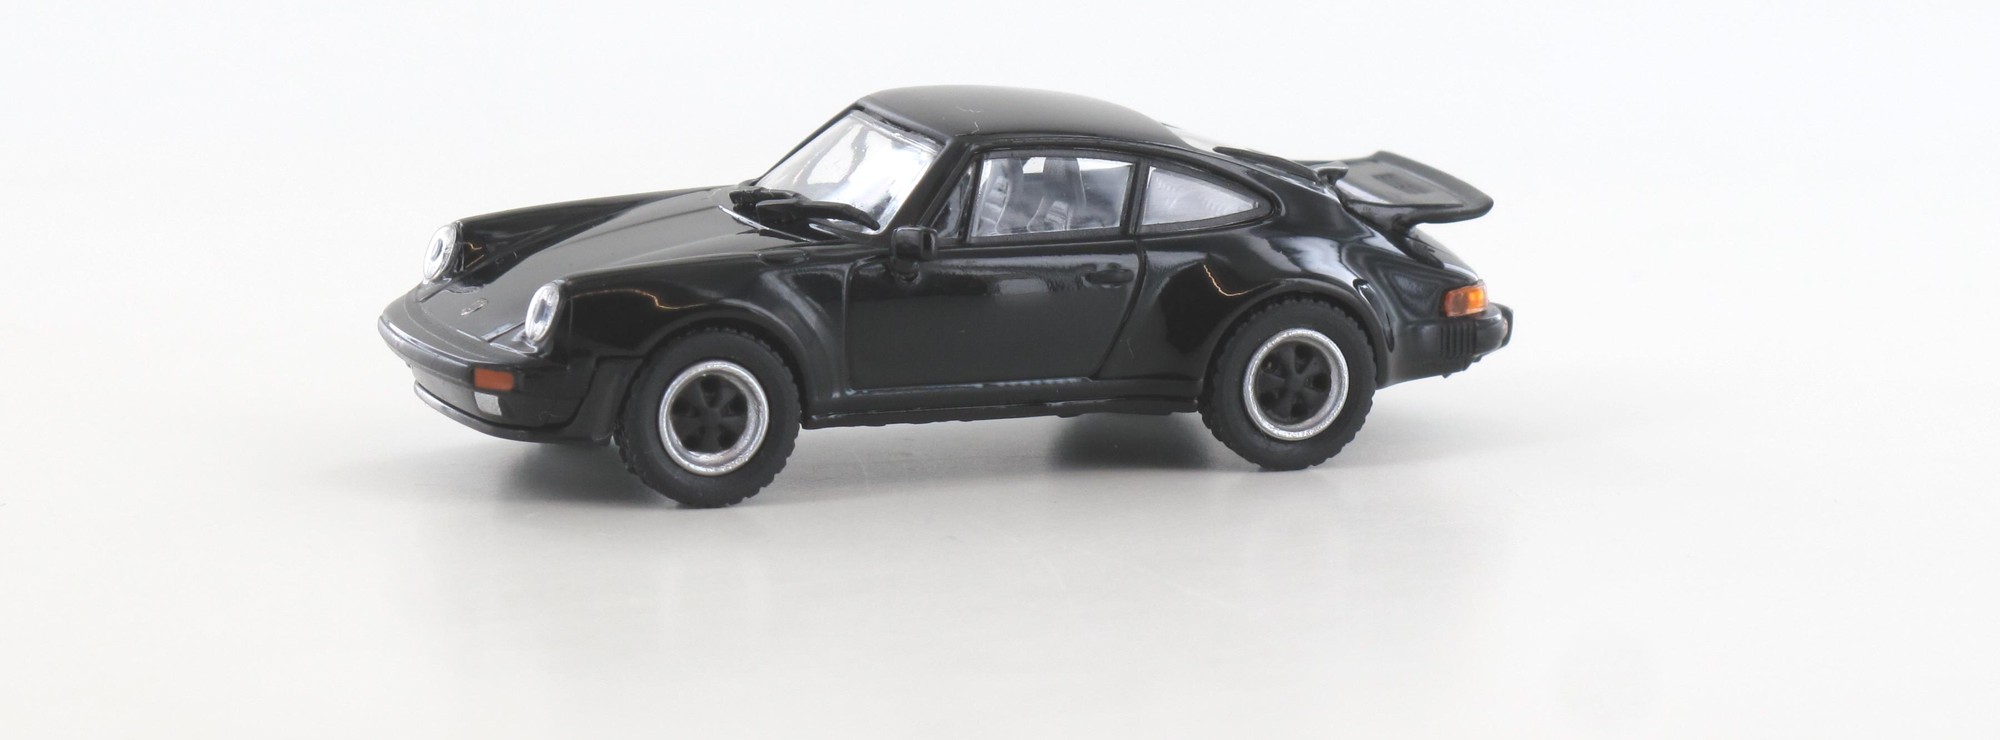 Porsche 911 Turbo Coupé - 1977 - black